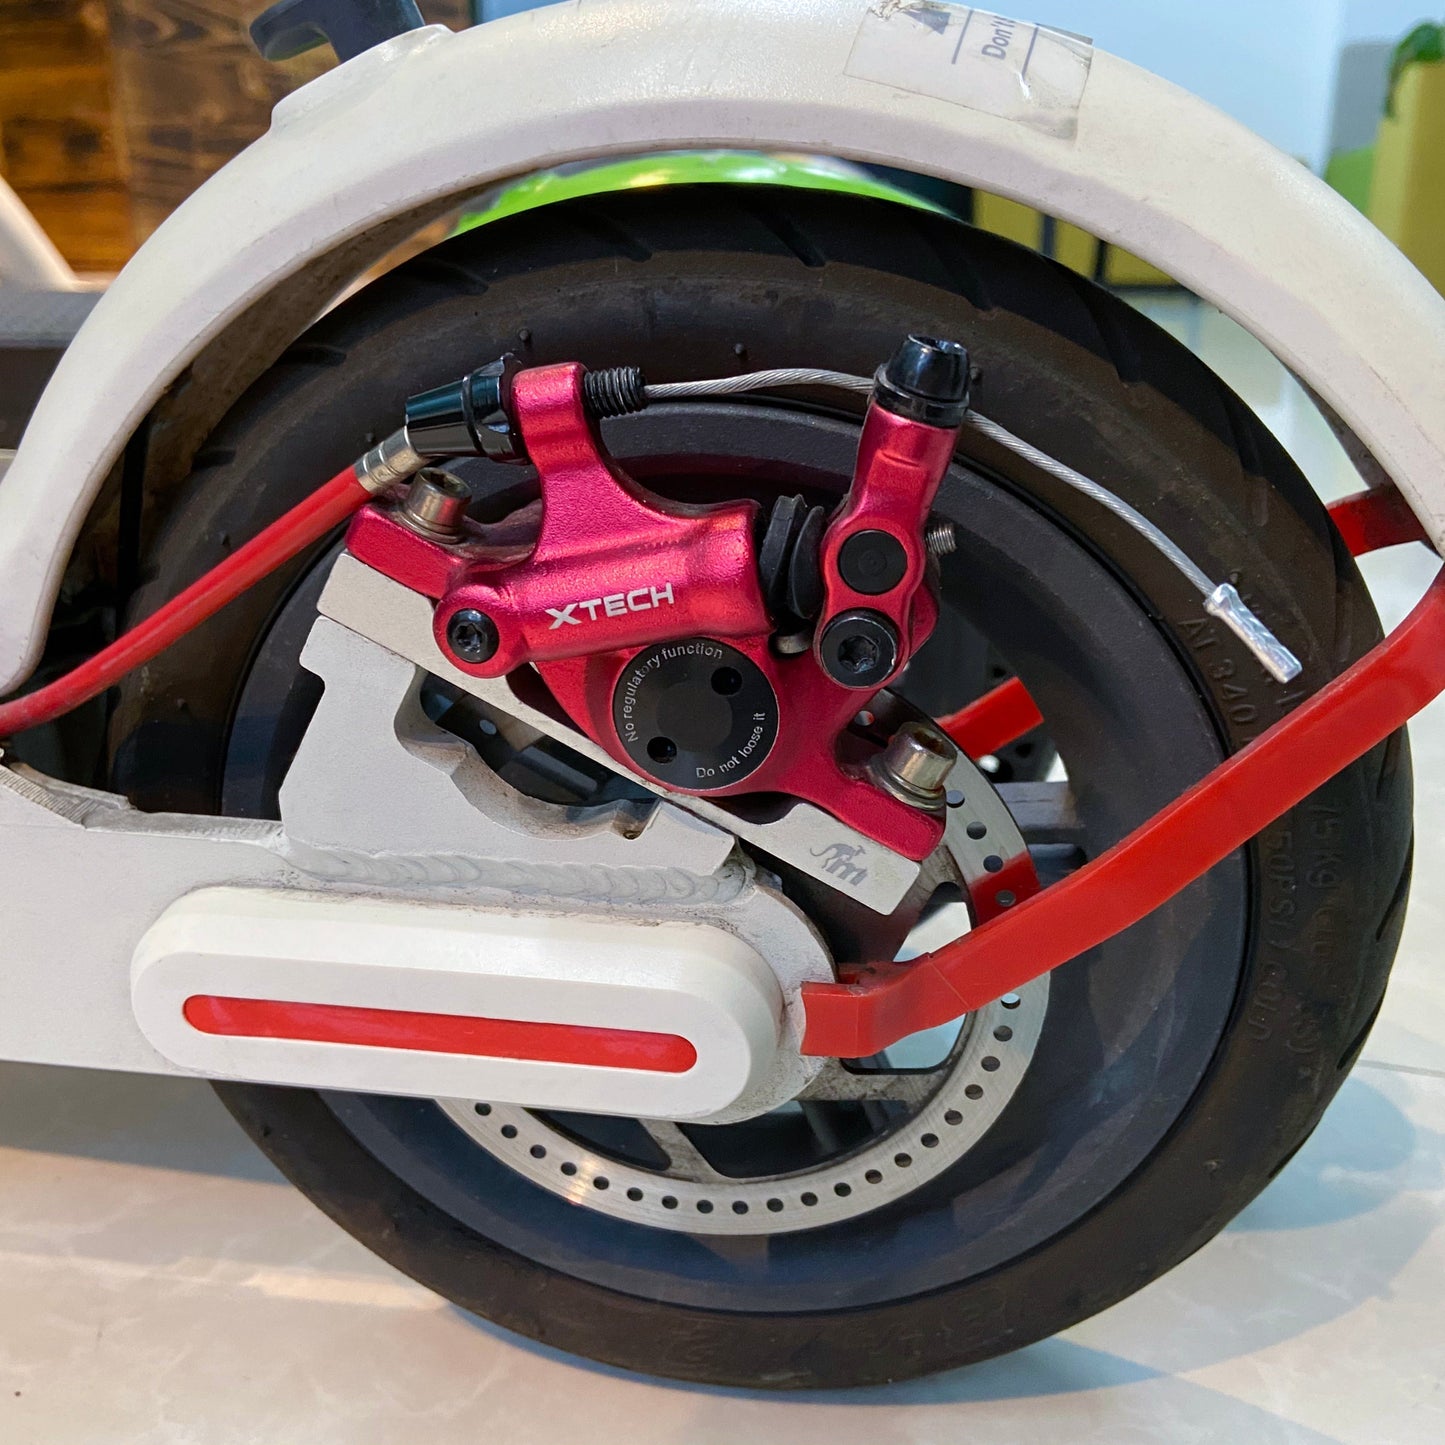 Monorim Xtech Disc Brake Upgrade Kit For Hiboy ks4 Scooter Brake Construction With 120mm Disk